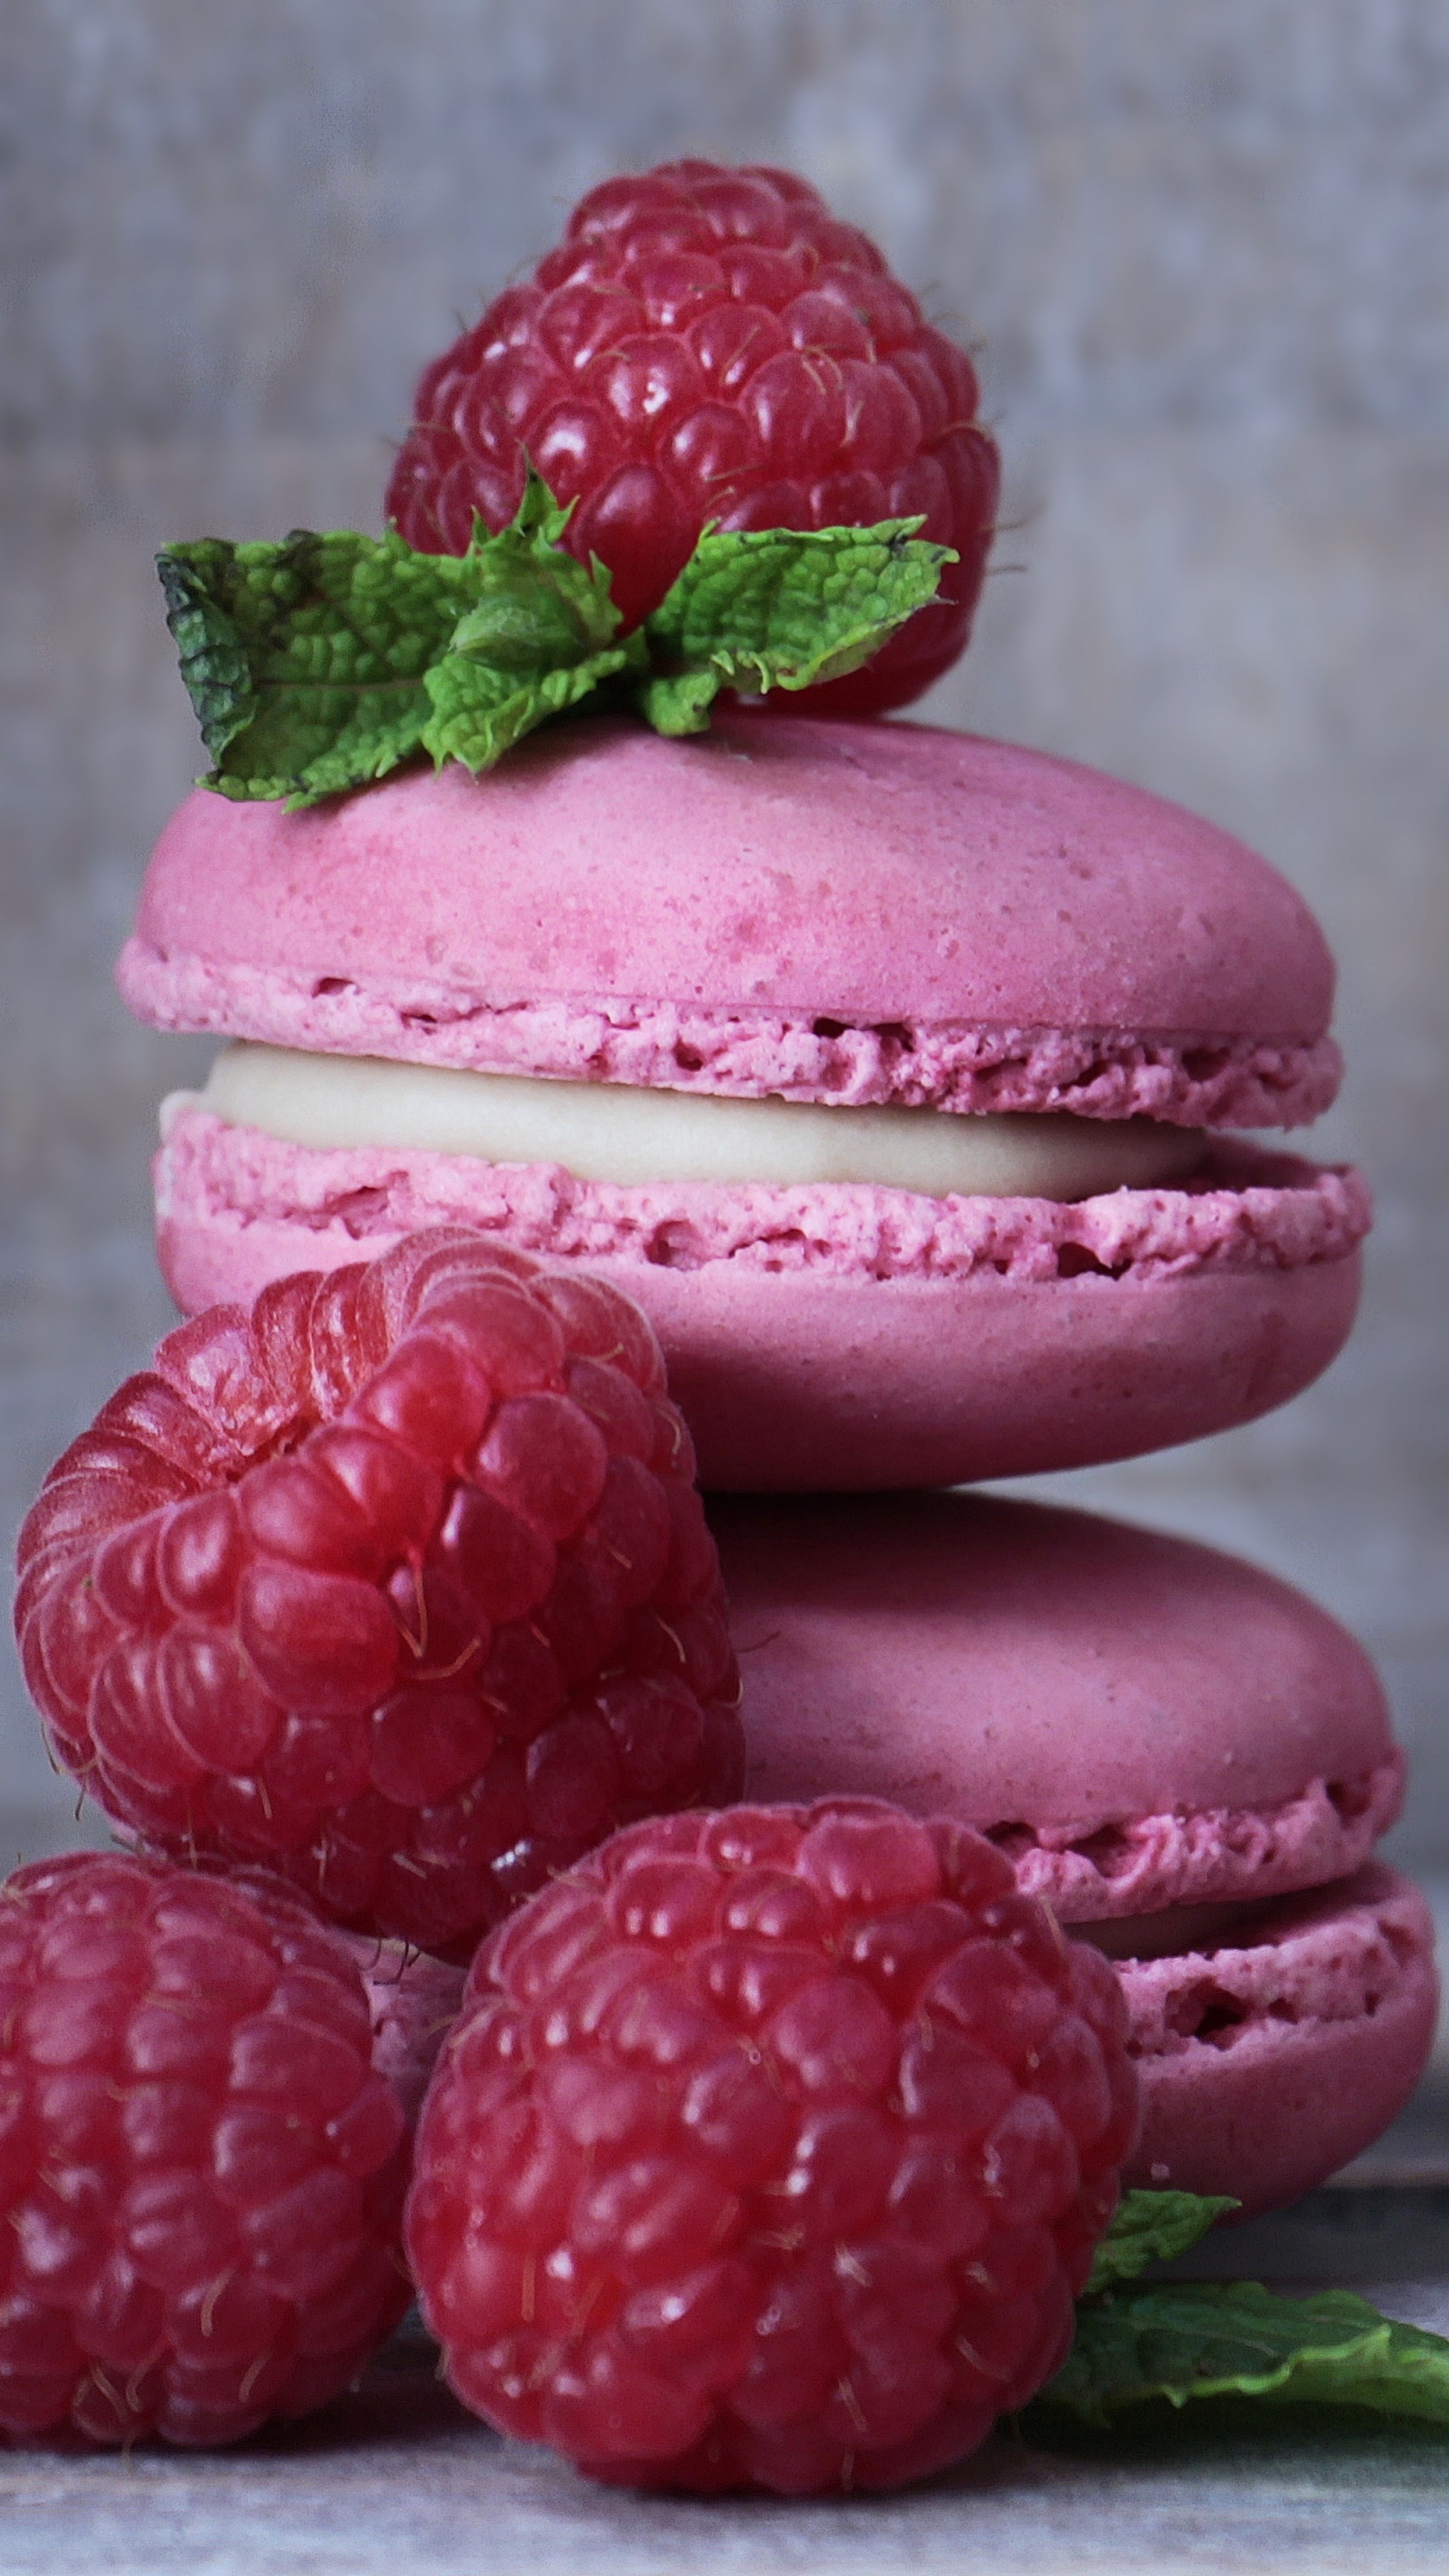 Macaron: A meringue-based sandwich cookie, Raspberries, Mint. 2160x3840 4K Background.